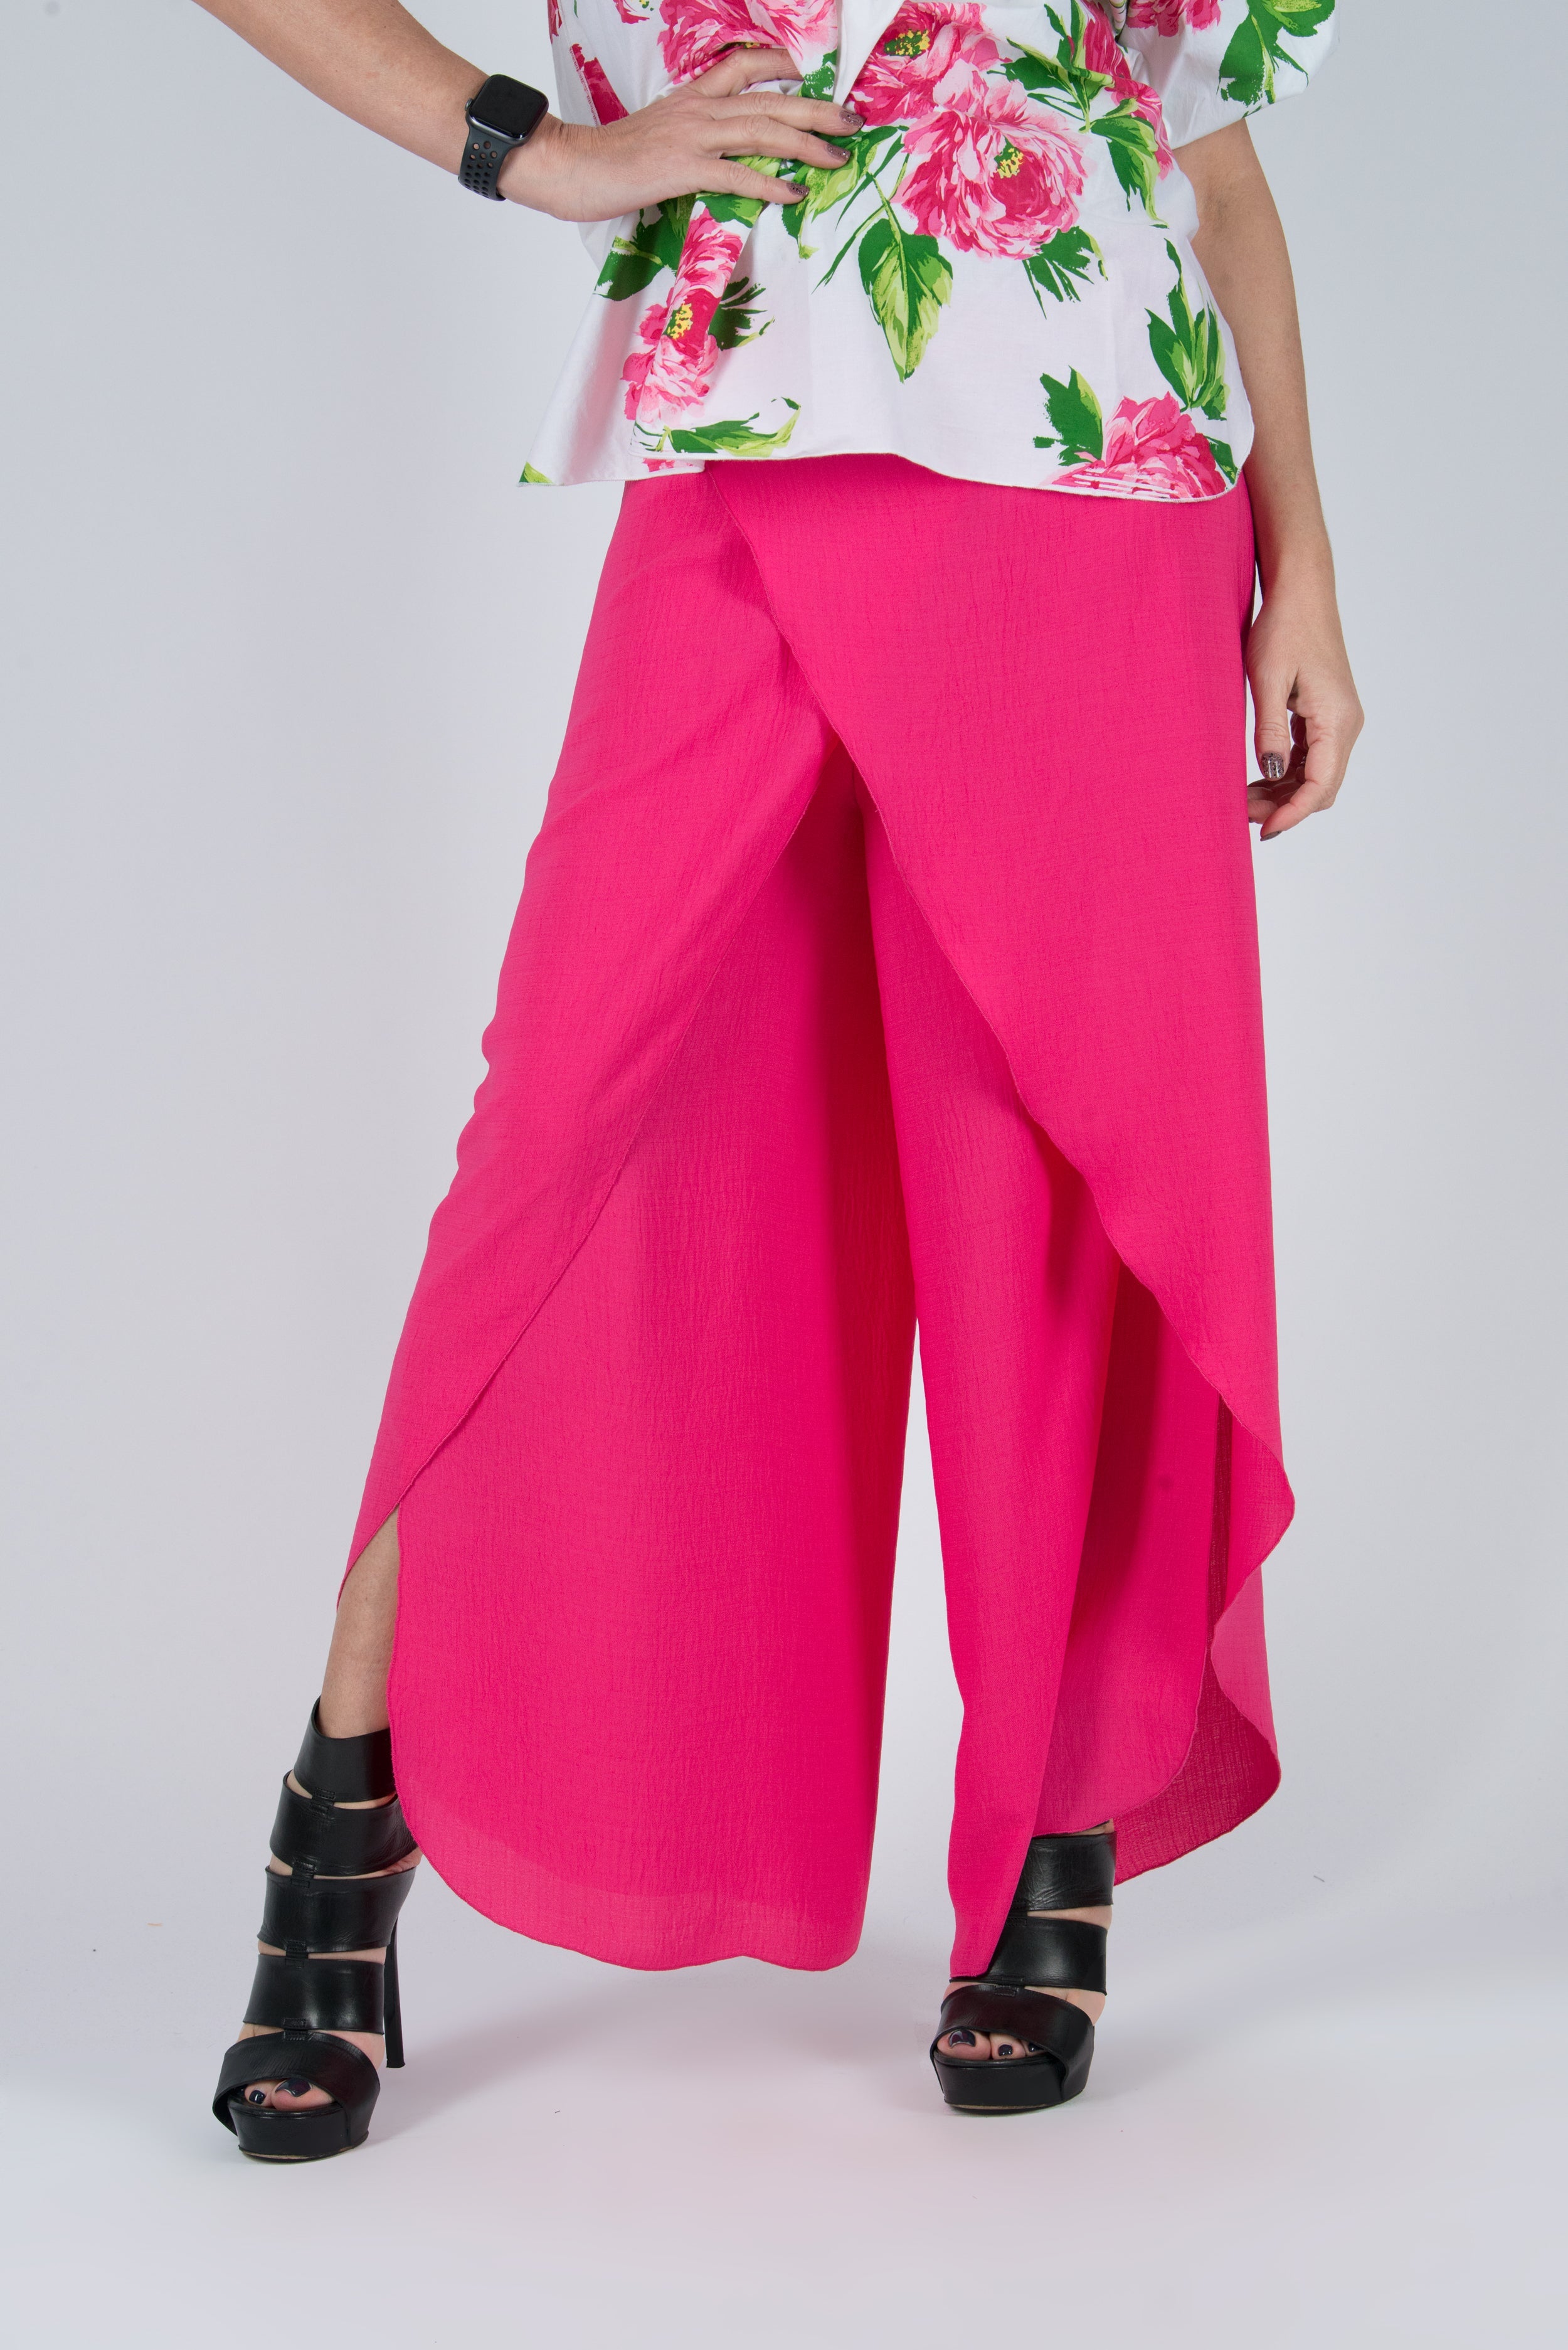 Summer Boho Hot Pink Pants by EUG Fashion